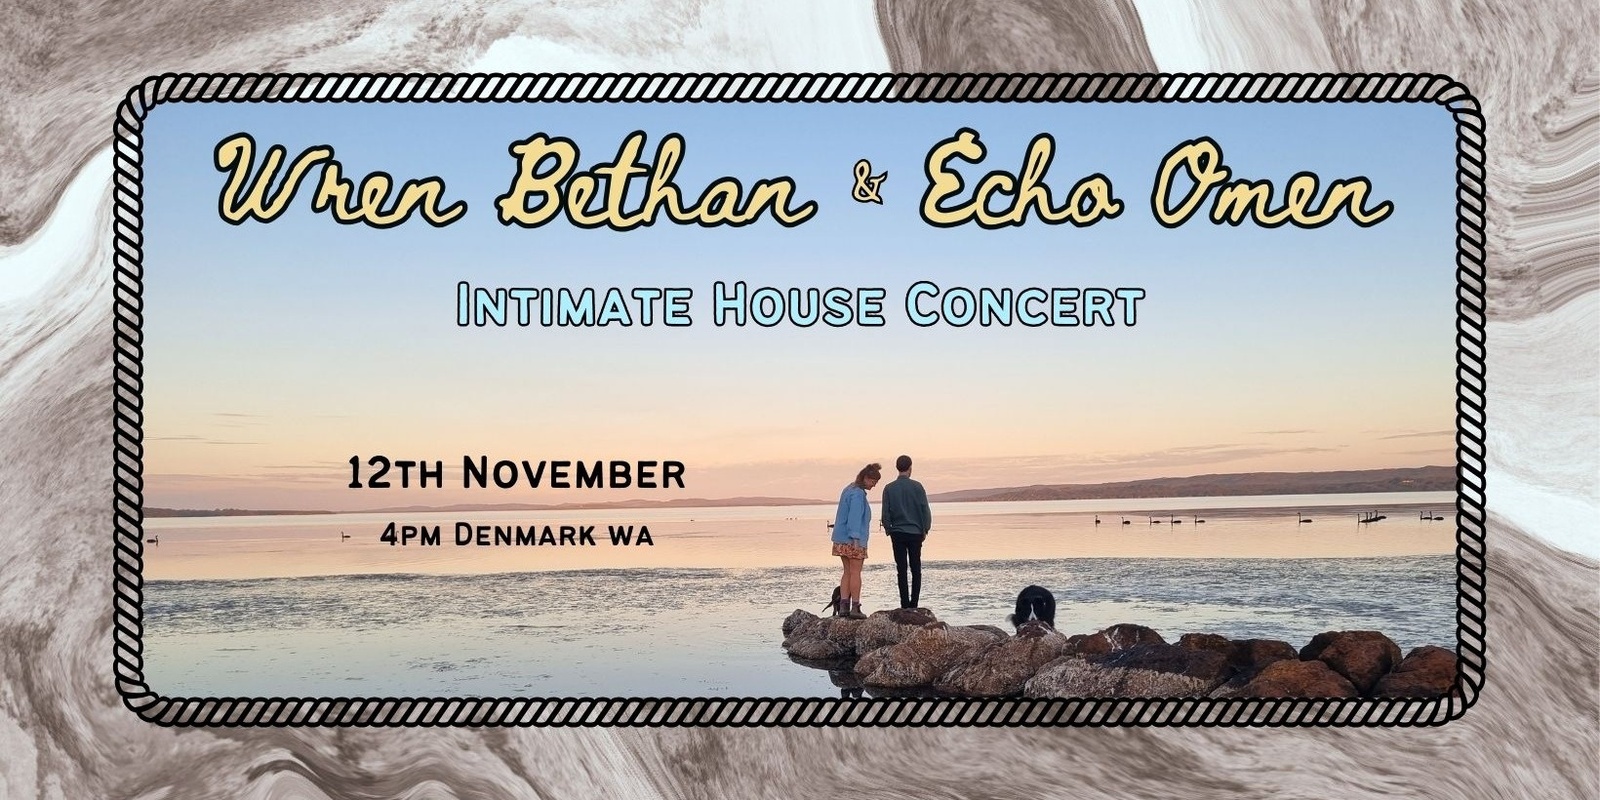 Banner image for House Concert - Wren Bethan, Echo Omen & Friends